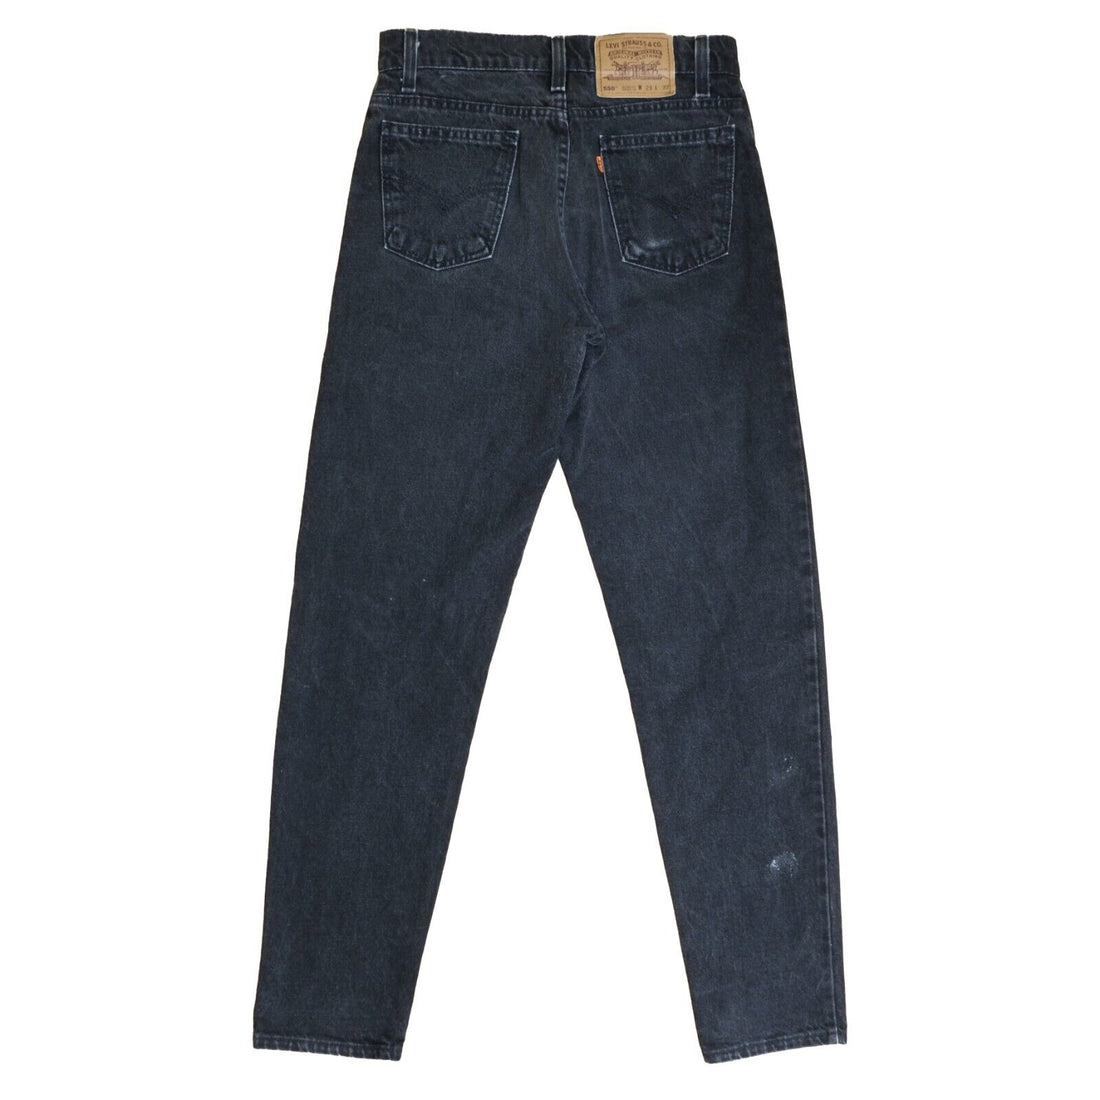 Vintage Levi Strauss & Co 550 Denim Jeans Pants Size 29 X 32 Black 40550-4159